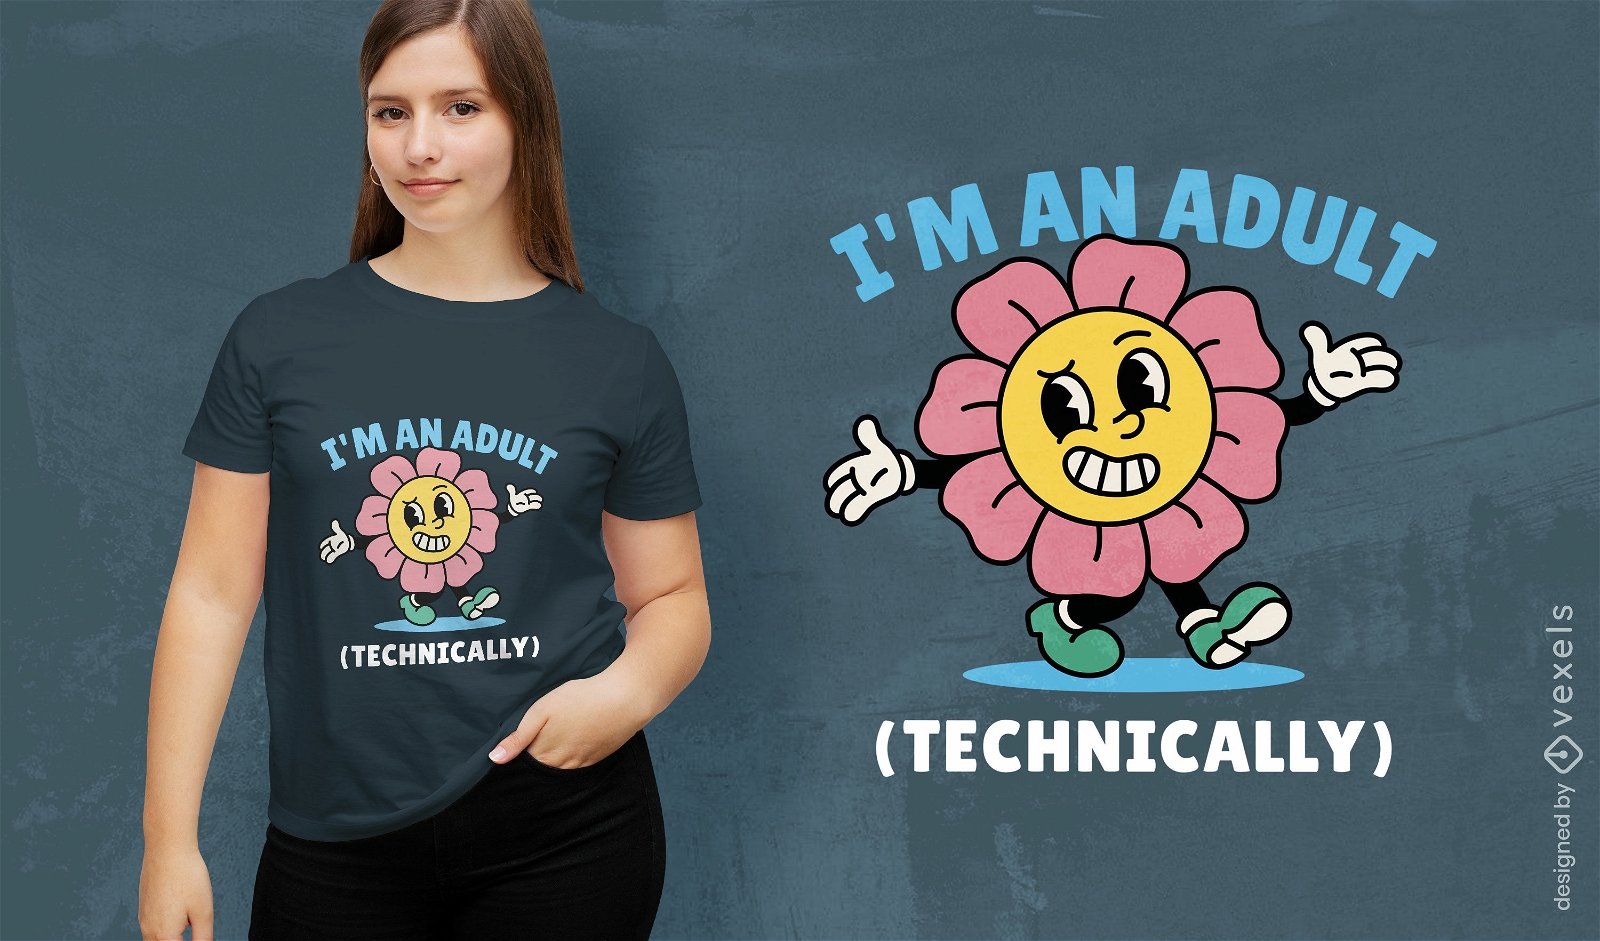 Technically adult t-shirt design